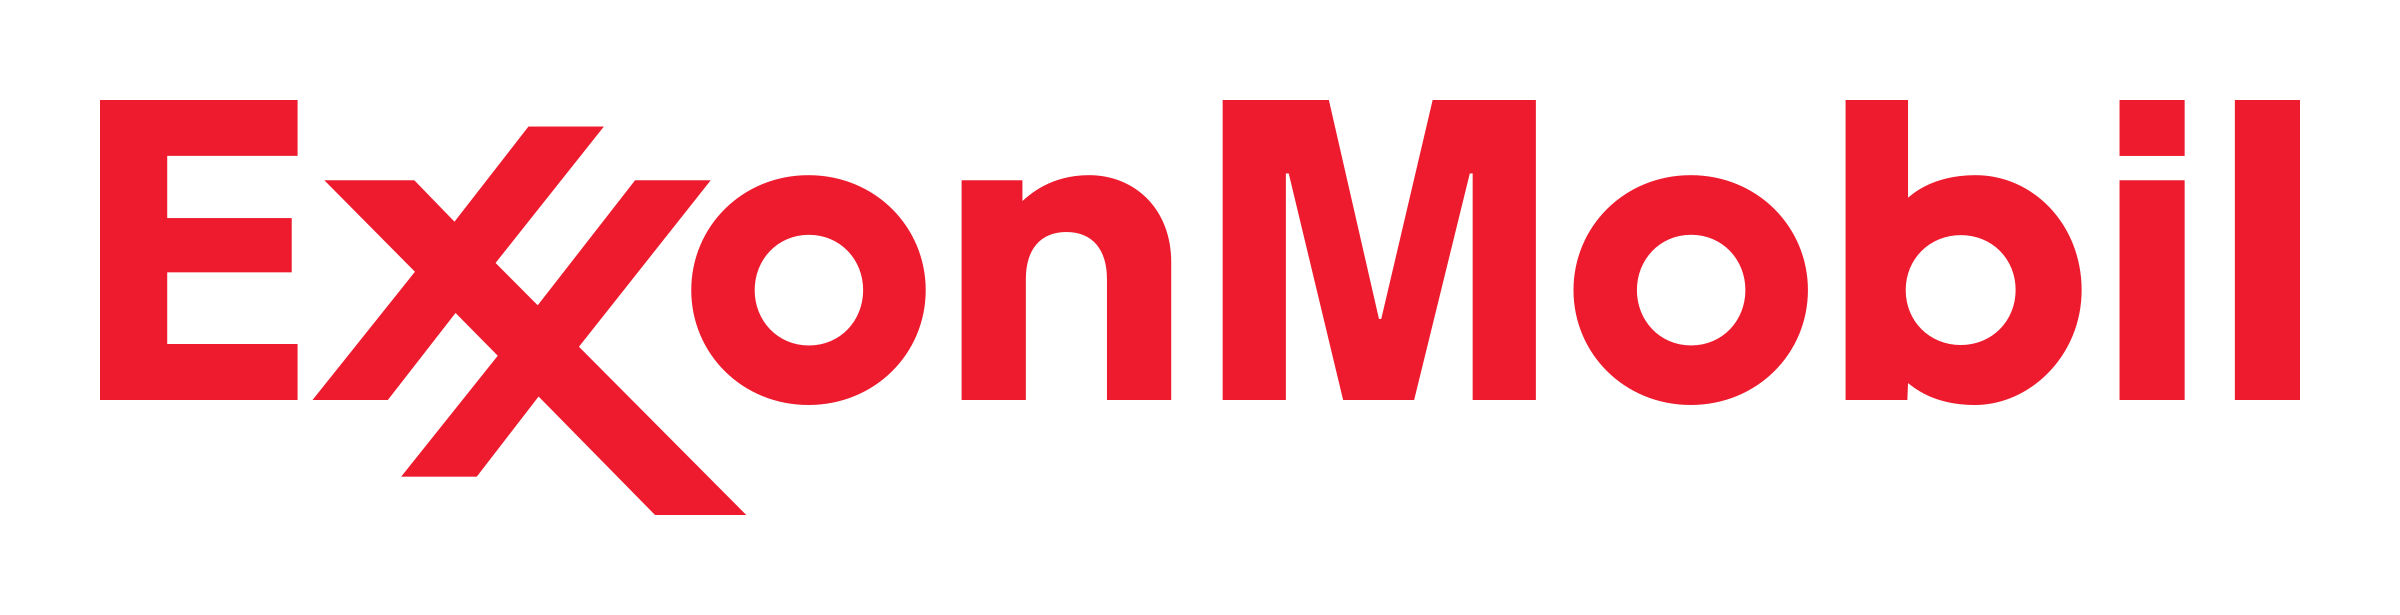 exxonmobil-logo-png-transparent